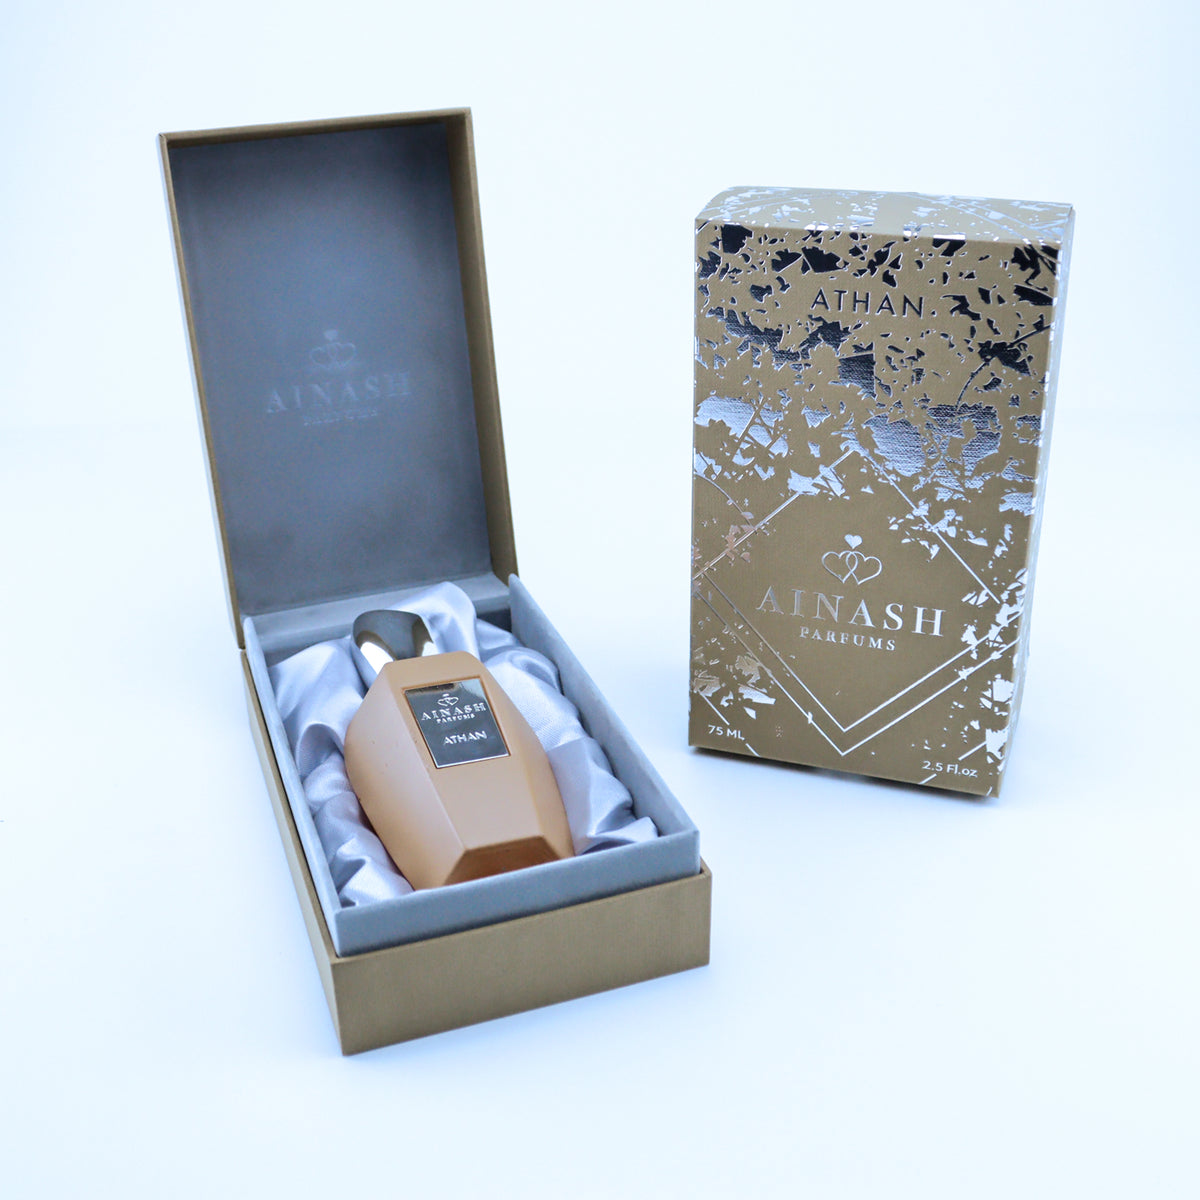 ATHAN By Ainash Parfums